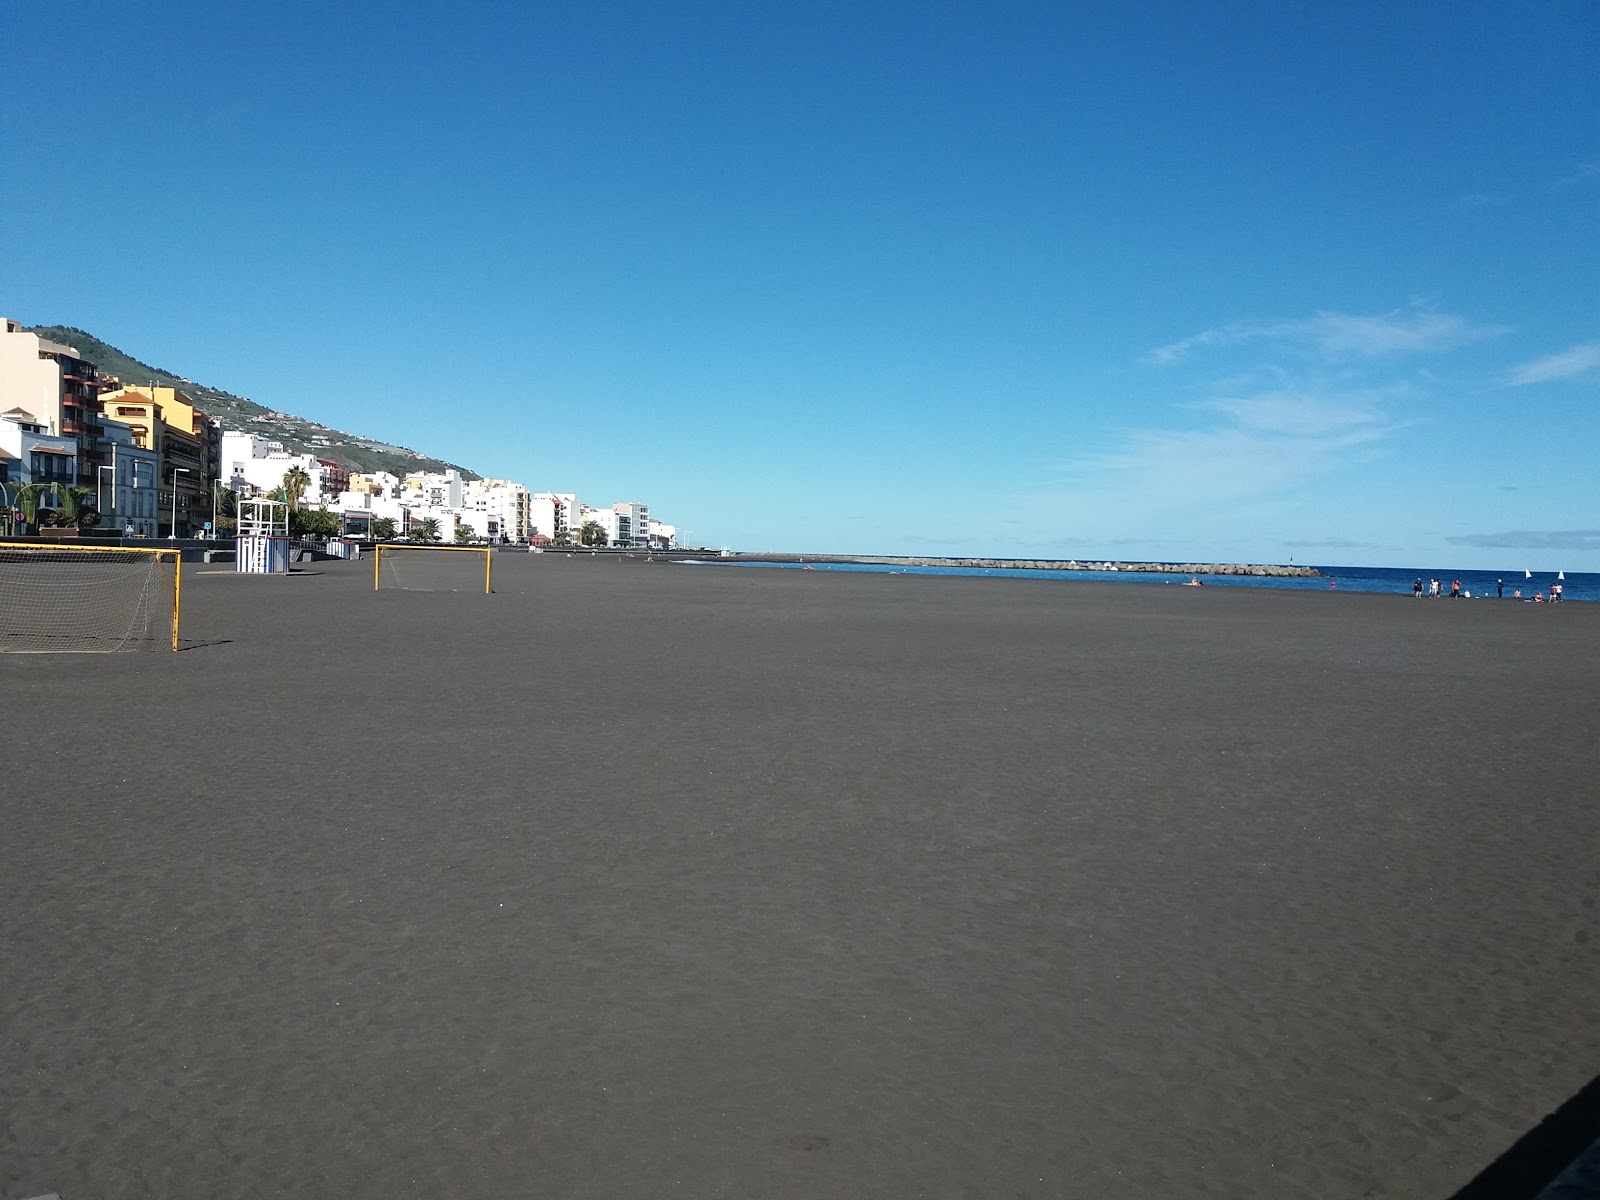 Foto de Playa de Santa Cruz - lugar popular entre os apreciadores de relaxamento